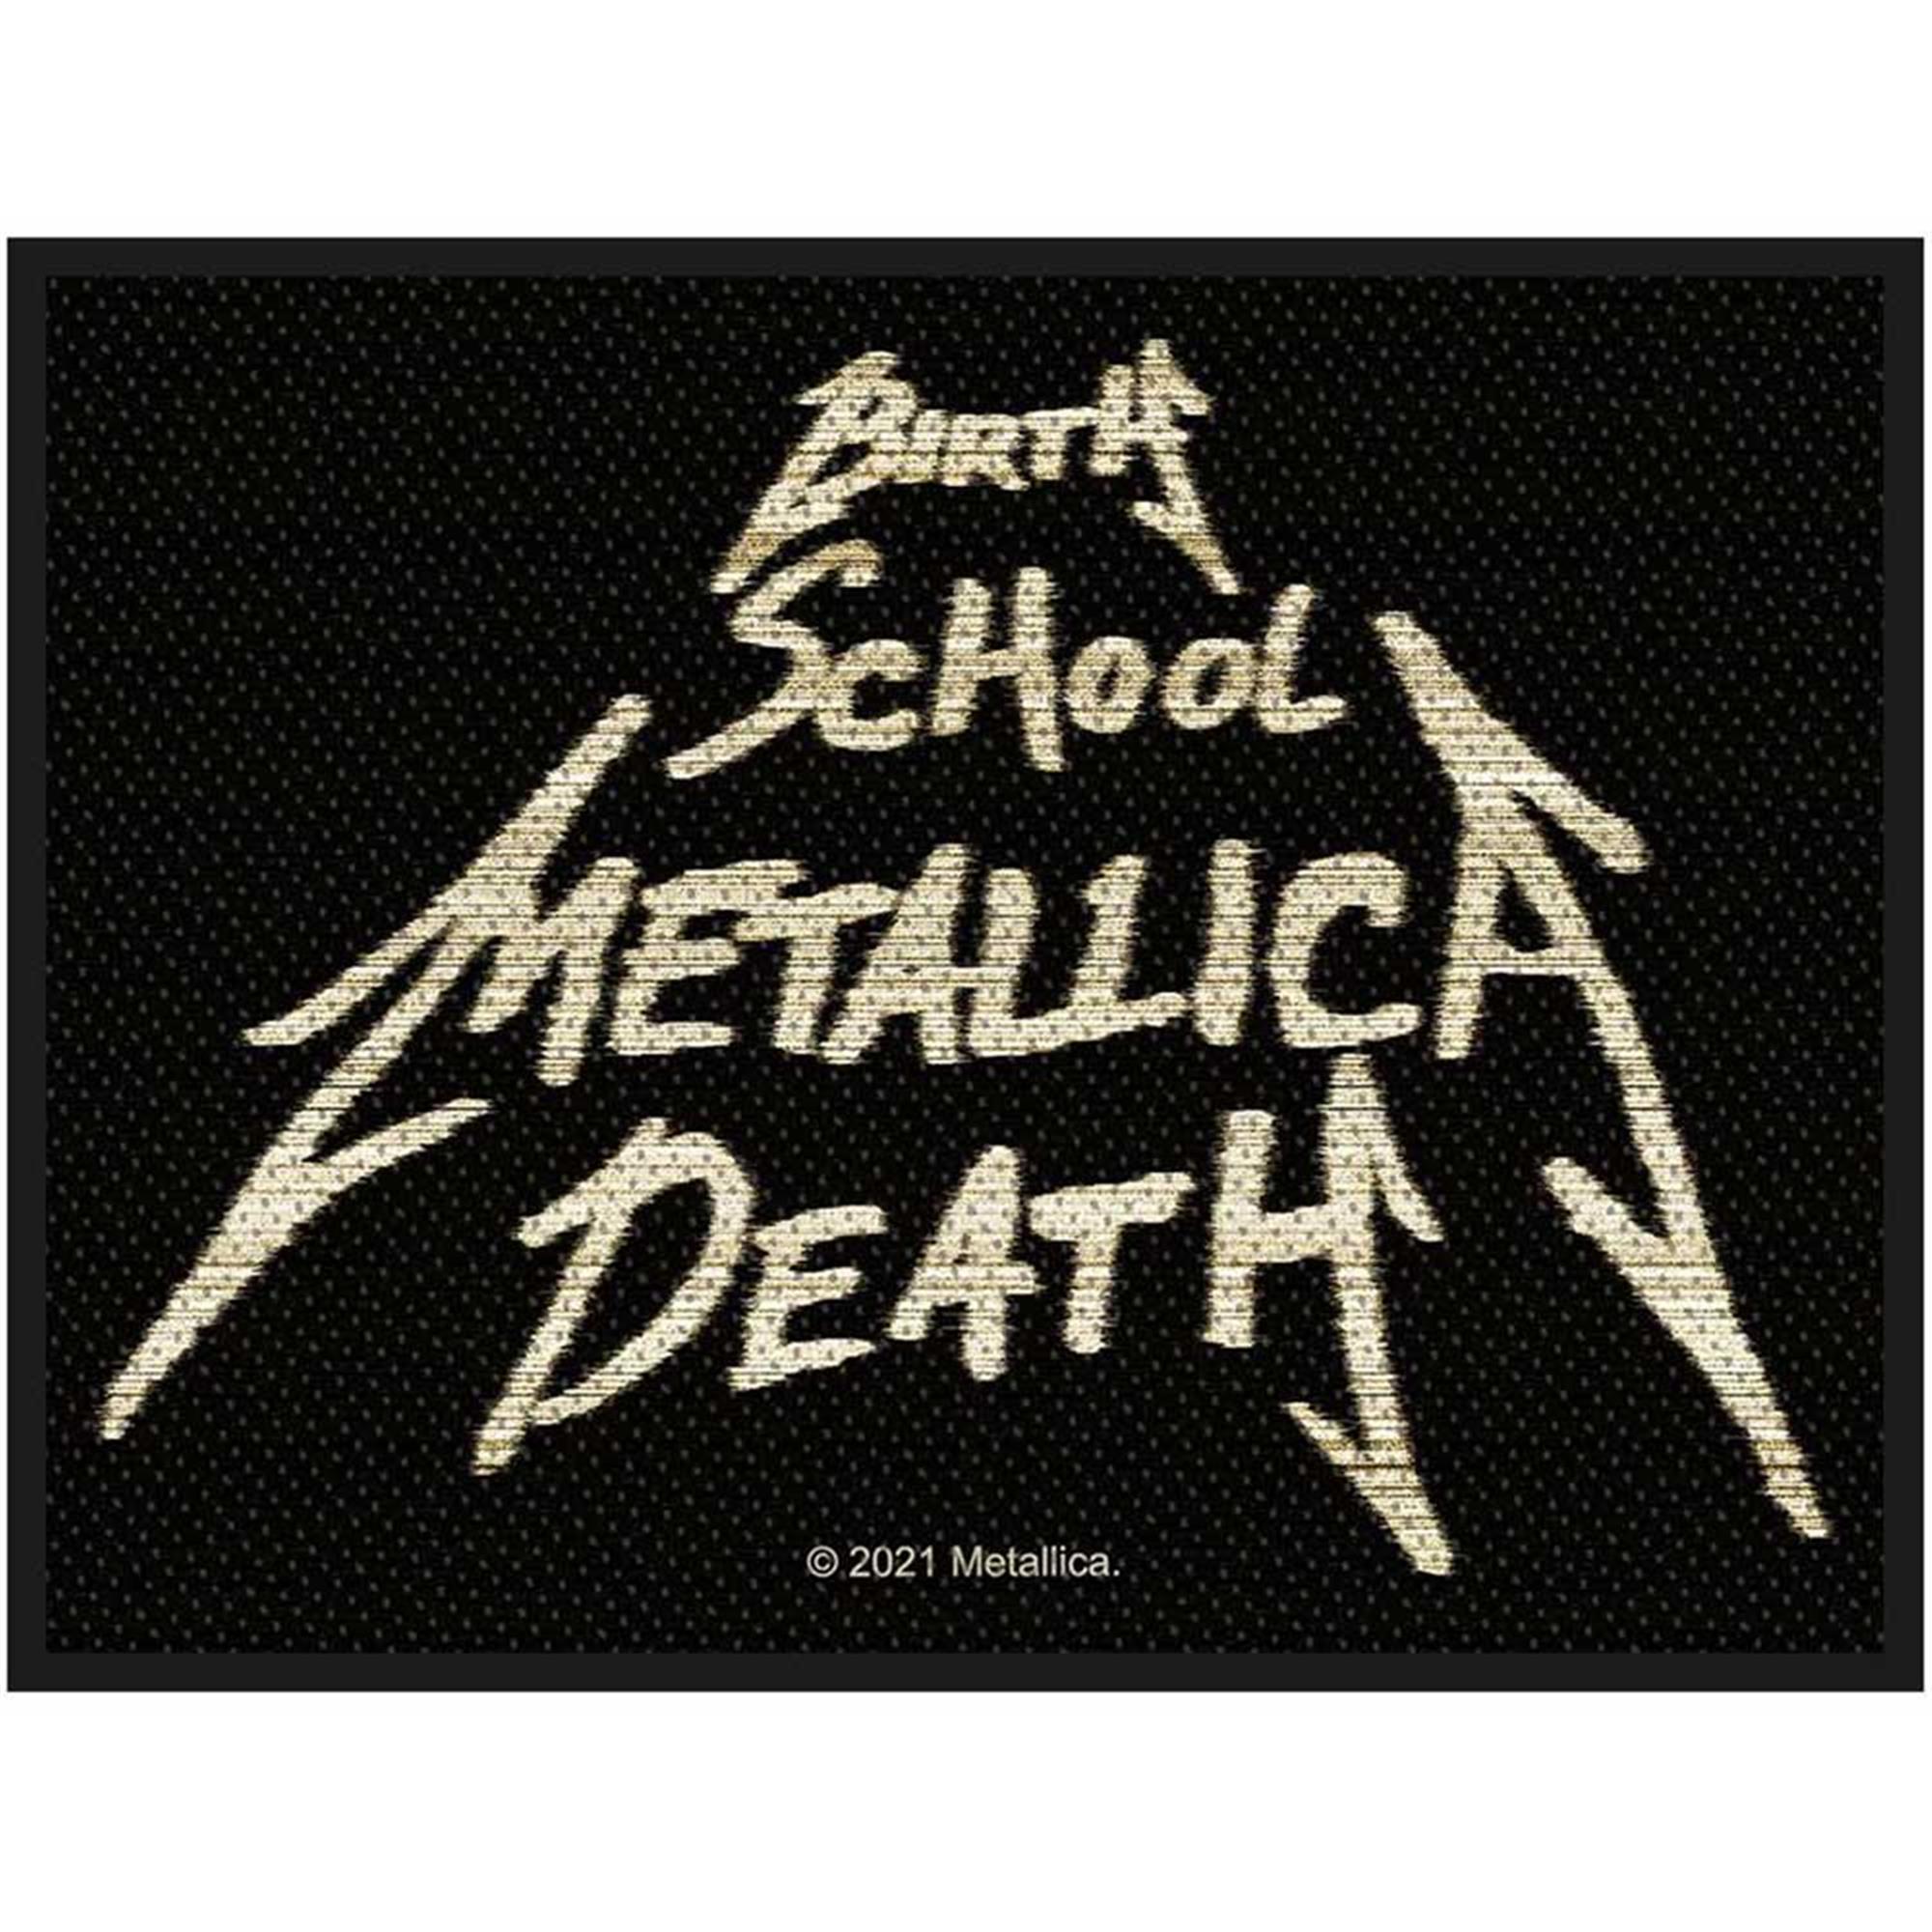 Birth, School, Metallica, Death Patch